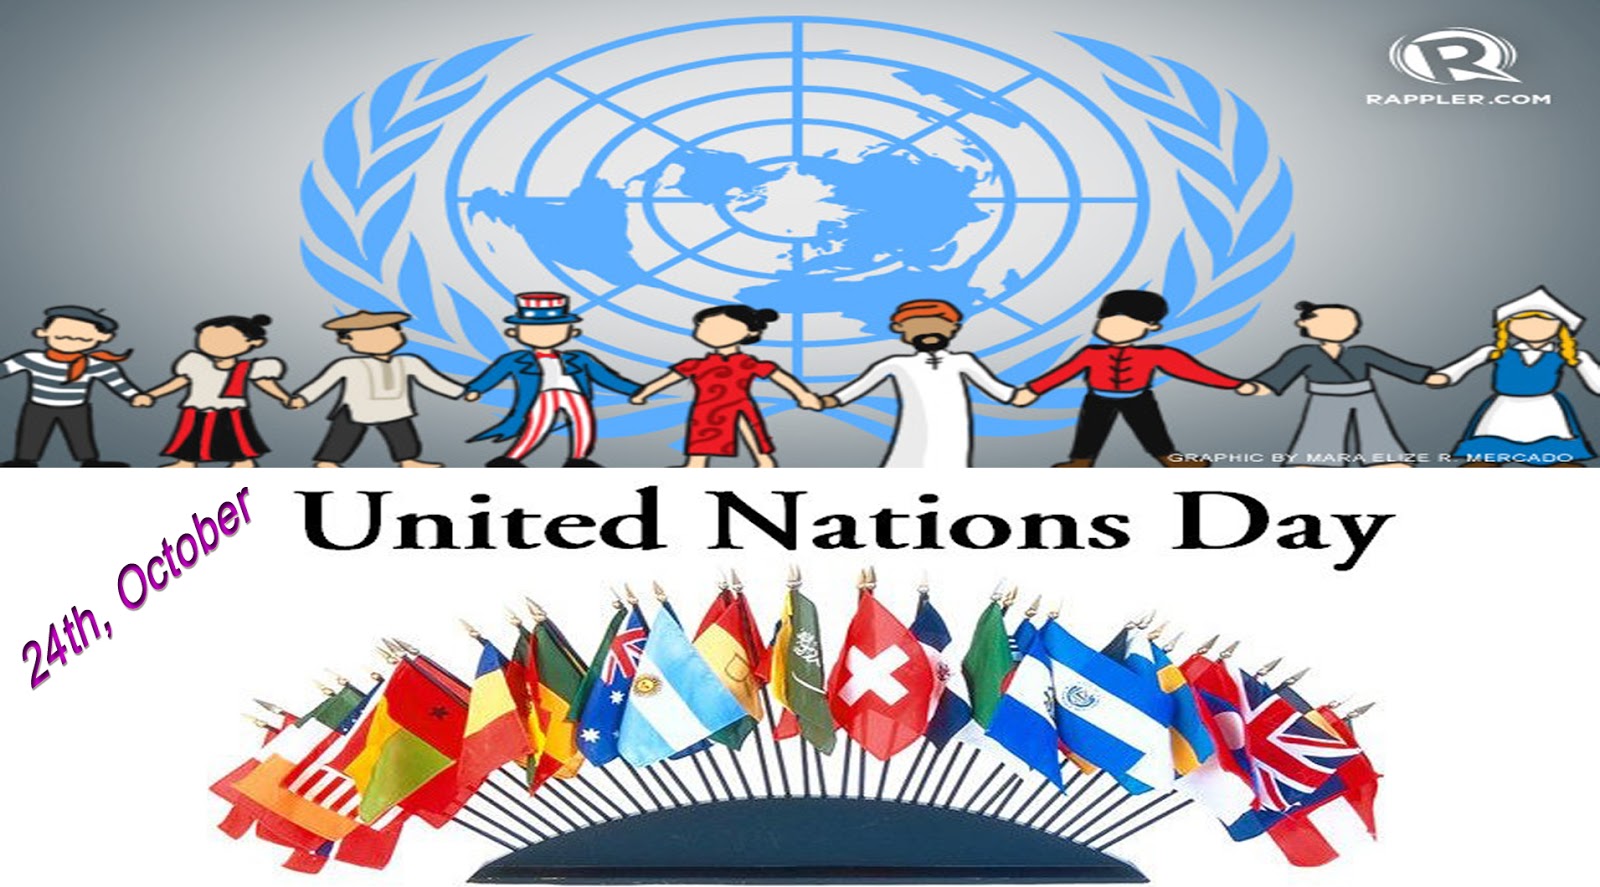 Aditya Library United Nations Day &n World Development Information Day